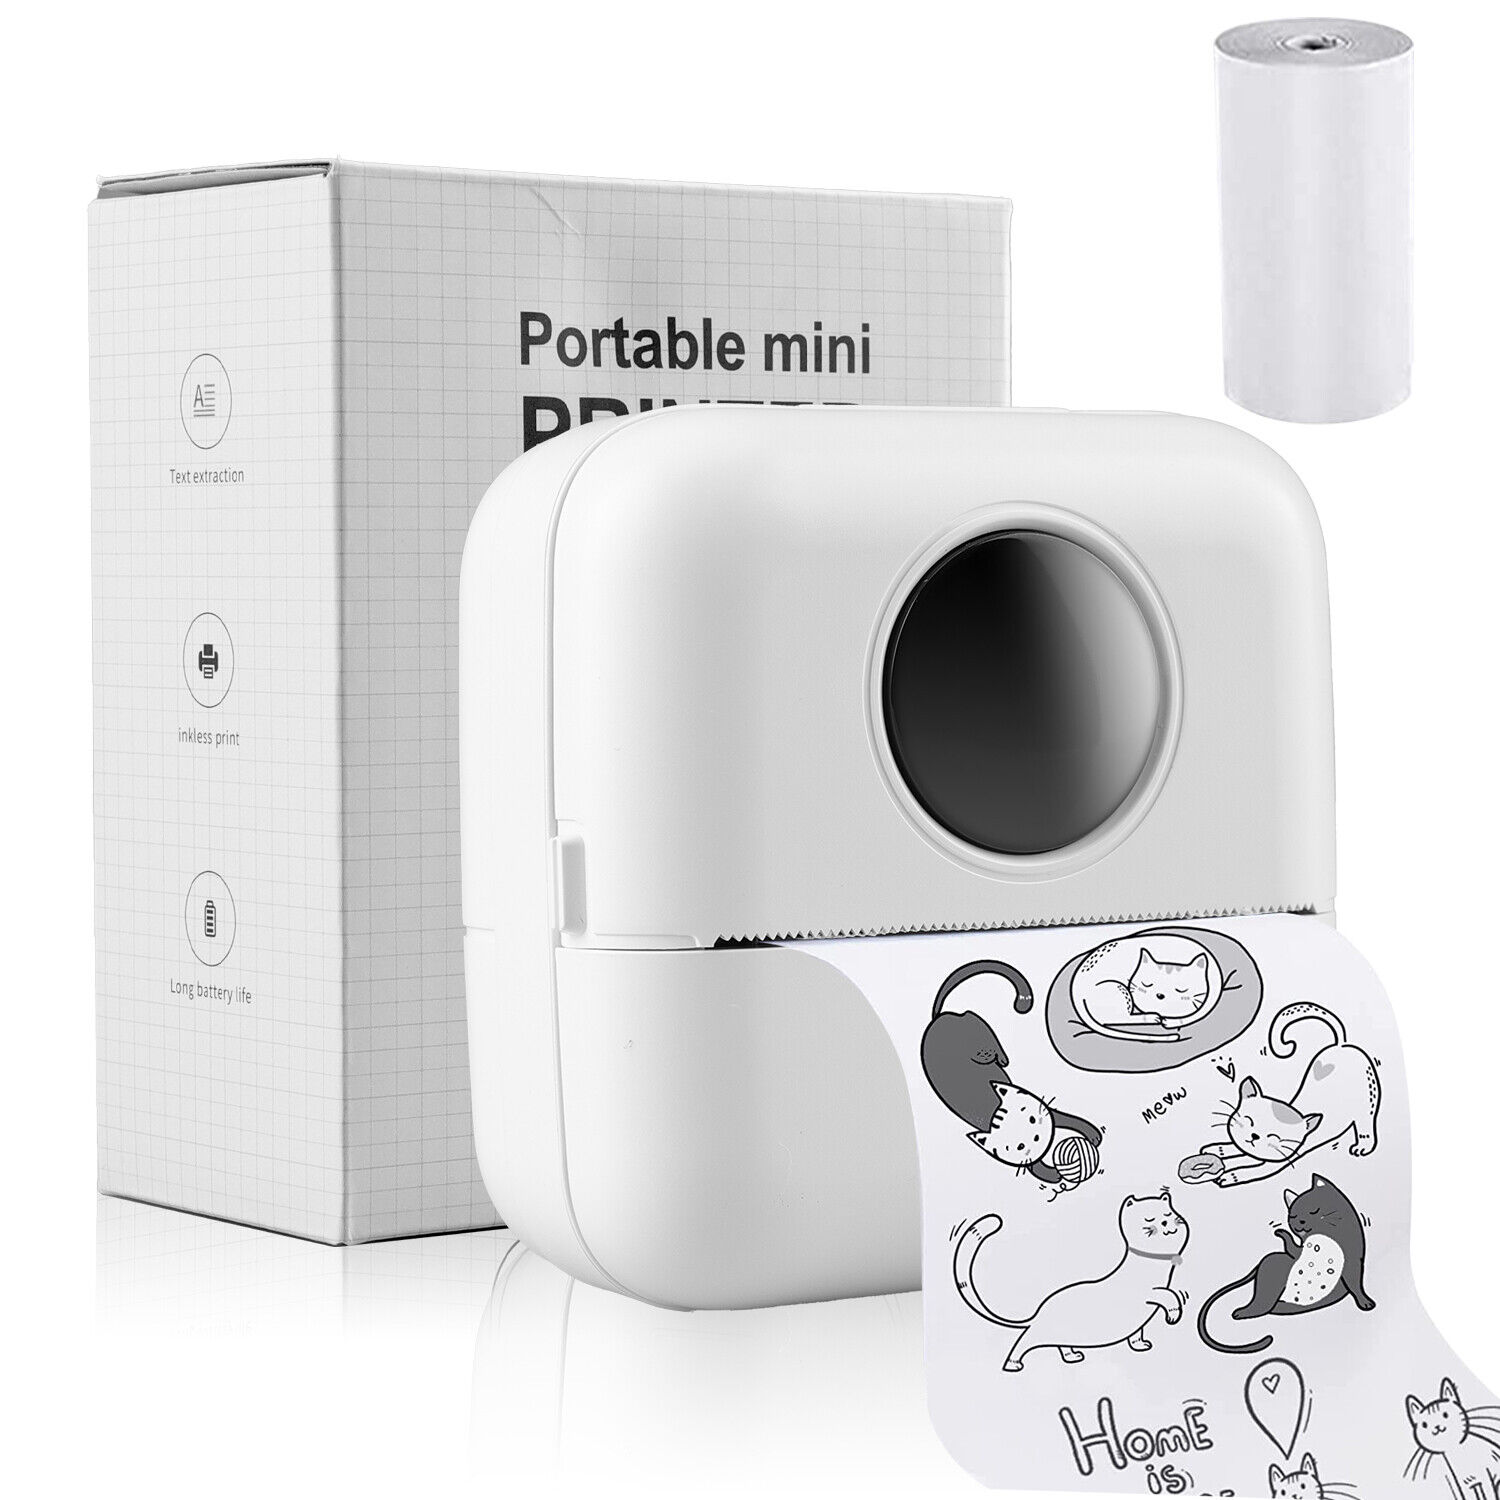 Portable Mini Thermal Printer Pocket Photo Printer Wireless Bluetooth Printing